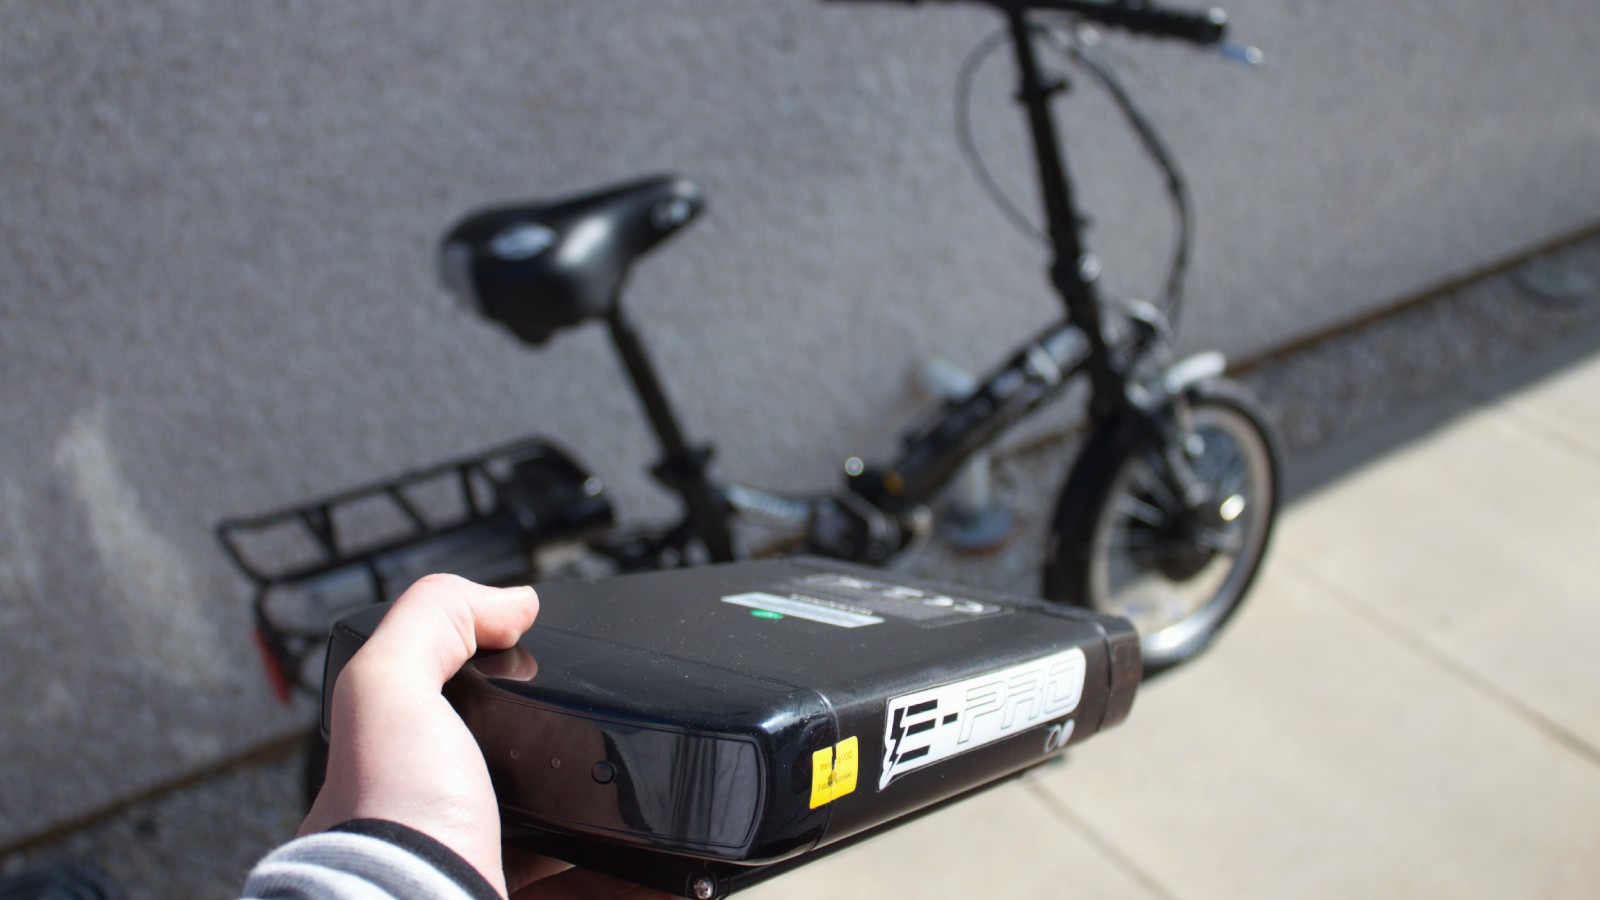 E-bike removable battery